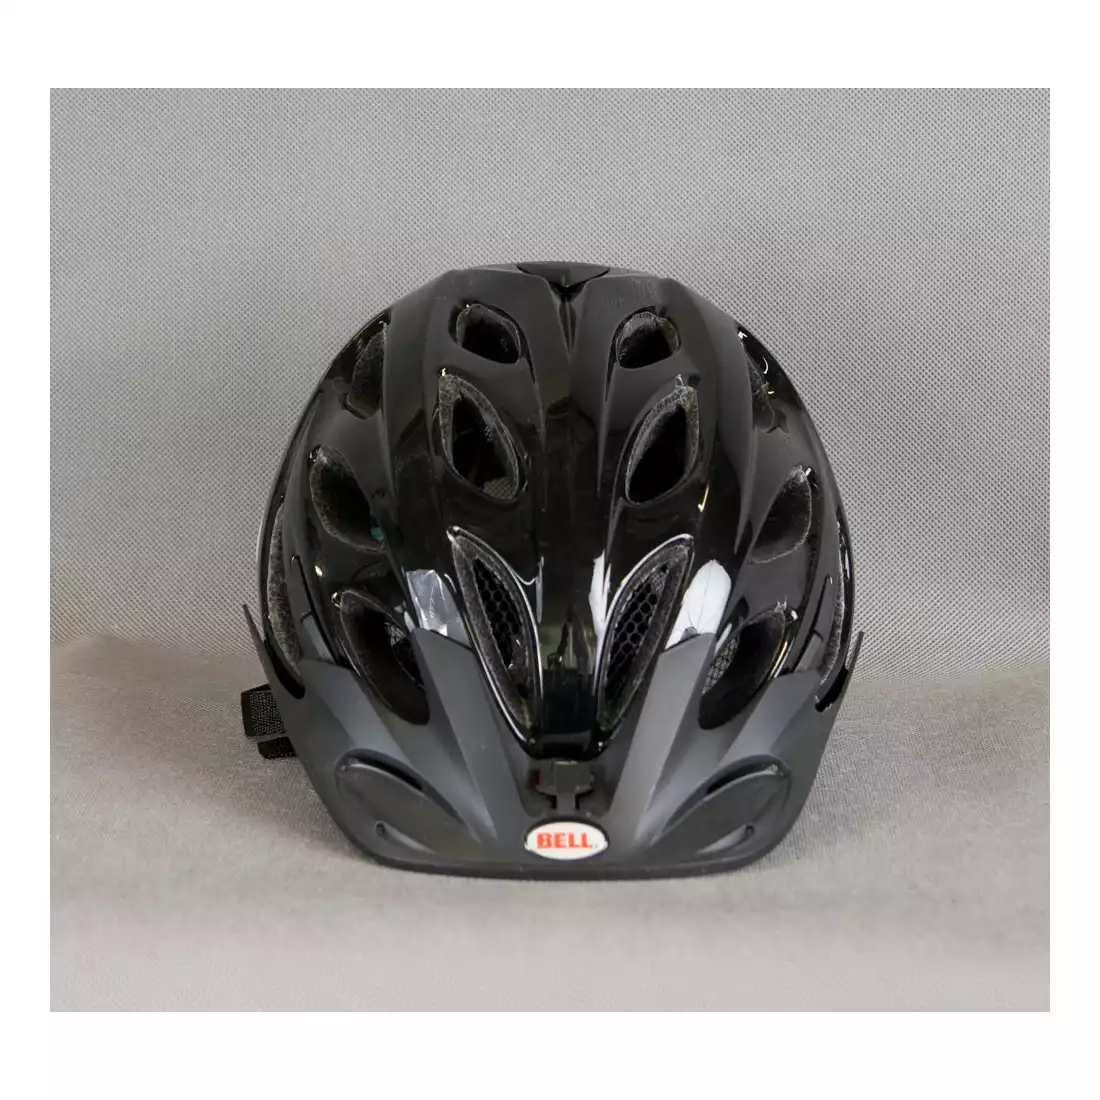 BELL - damski kask rowerowy ARELLA , kolor: Czarny